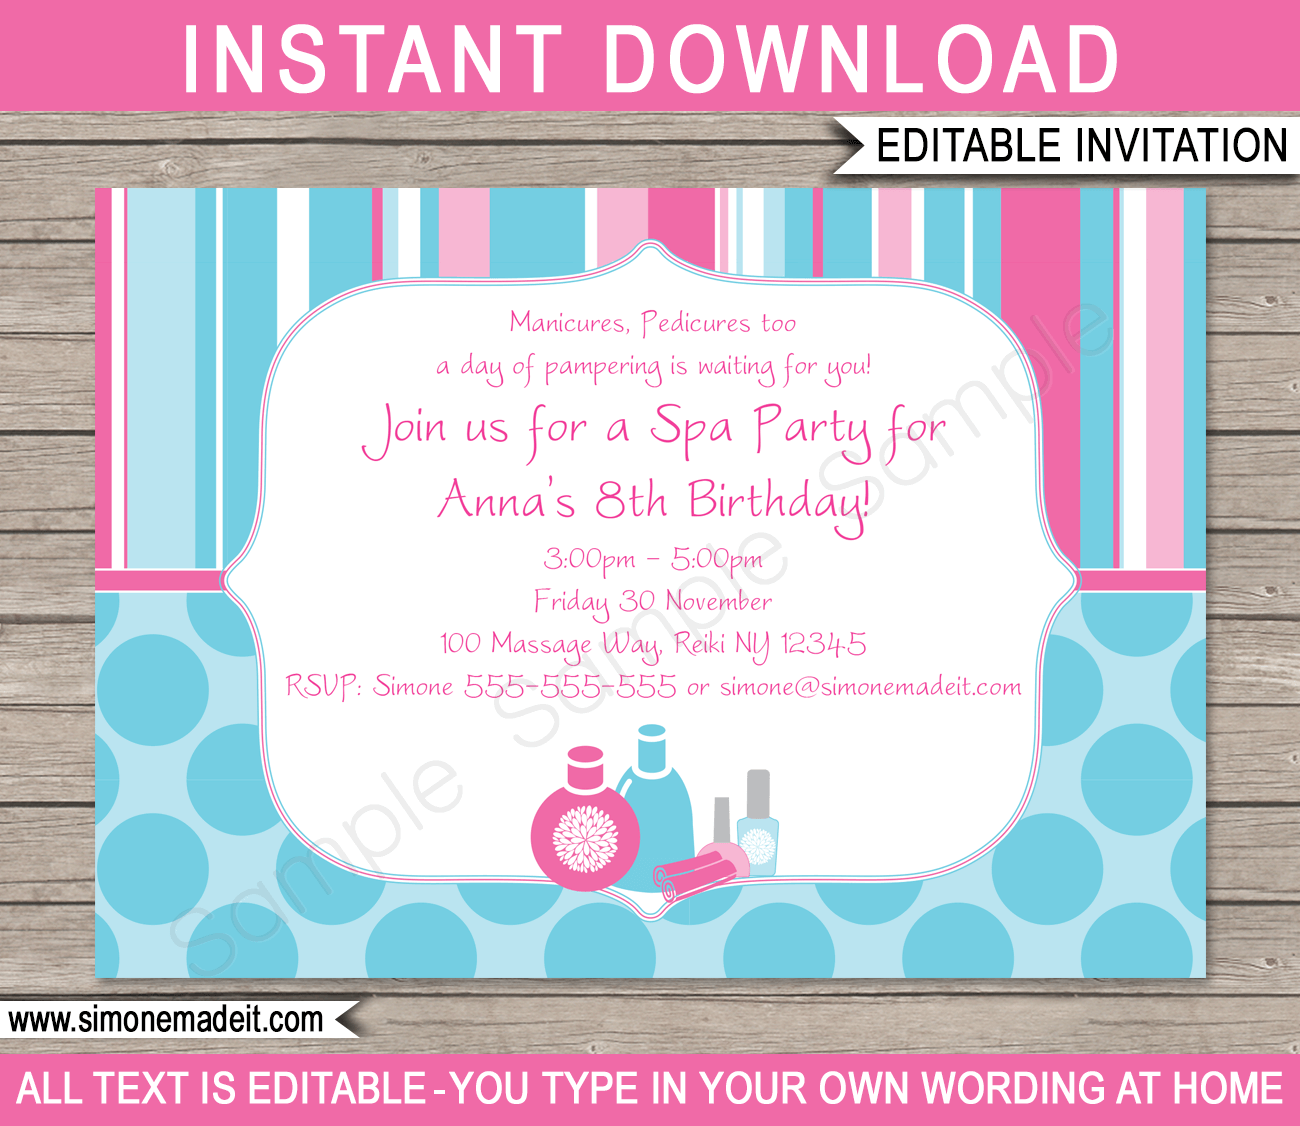 Spa Party Invitations | Birthday Party | Editable DIY Theme Template | INSTANT DOWNLOAD $7.50 via SIMONEmadeit.com